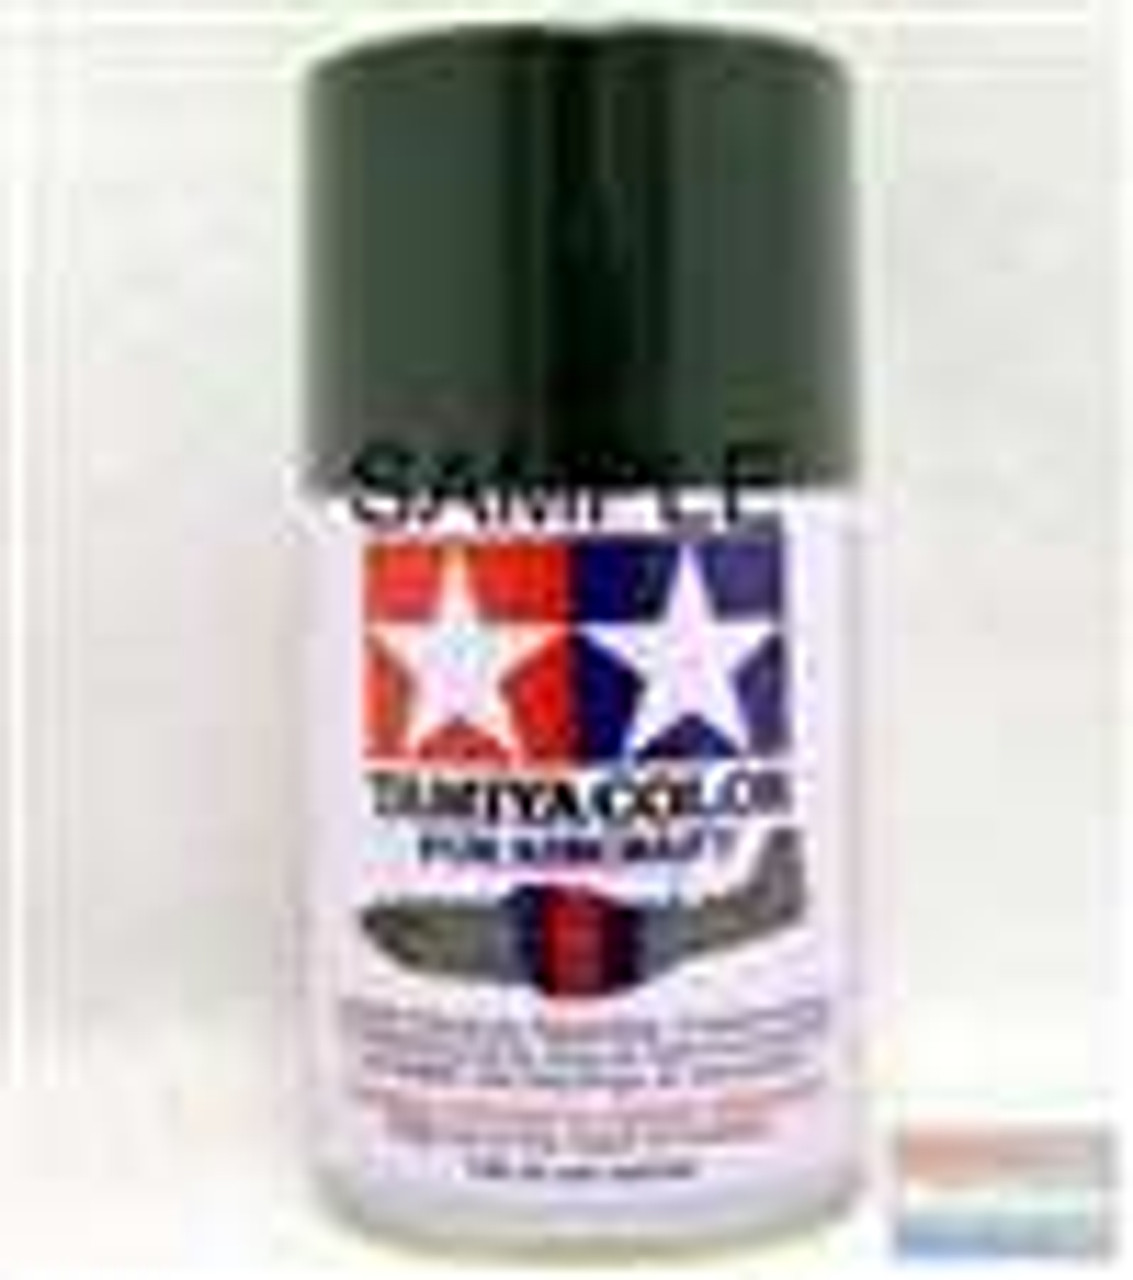 Tamiya 85019 TS-19 Metallic Blue Spray Paint / Tamiya USA